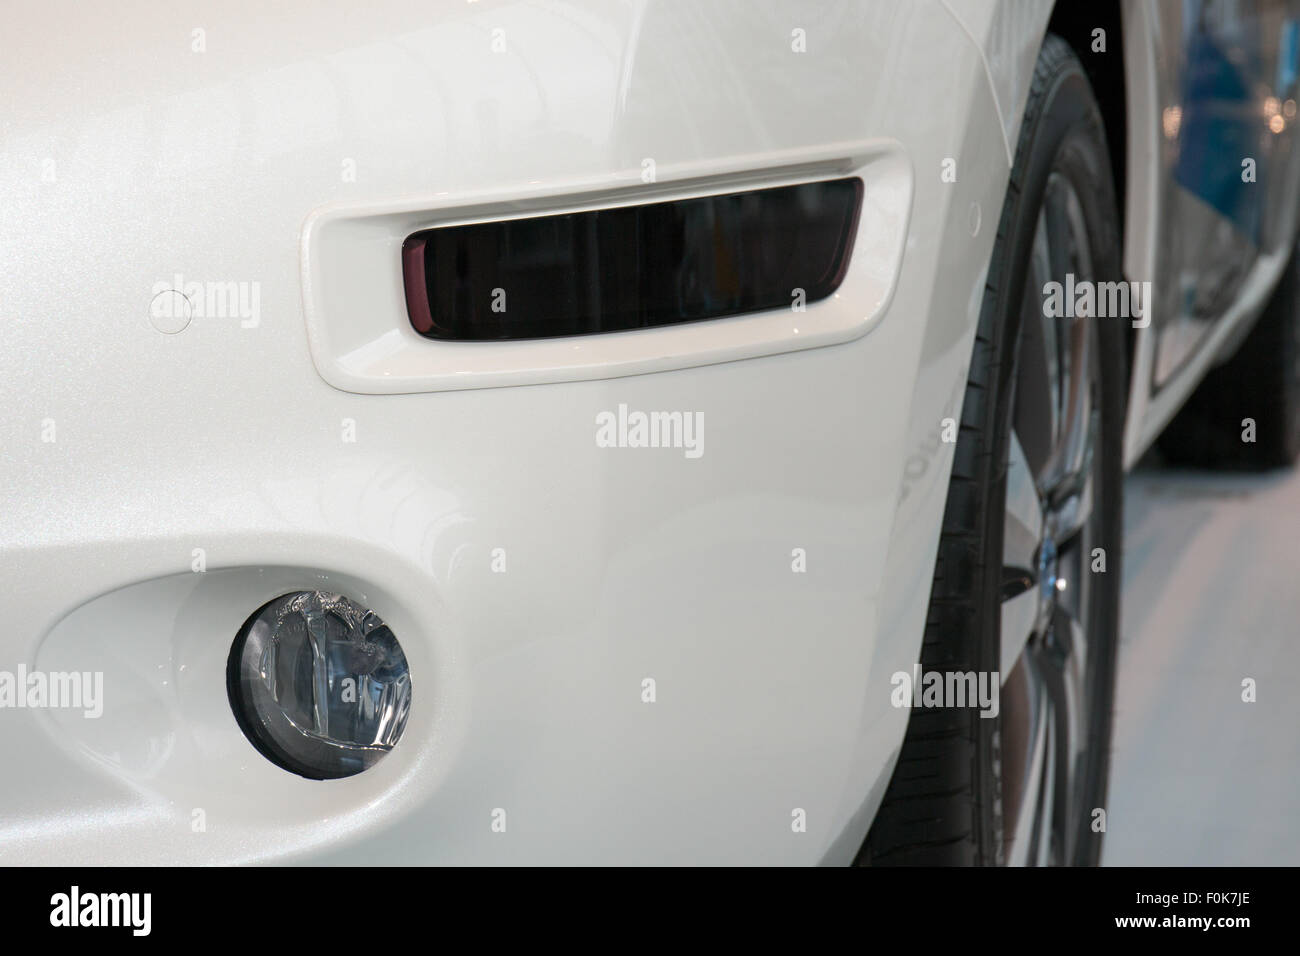 Nissan autonomen Fahren vorne links Sensor 2015 Nissan Global Headquarters Gallery Stockfoto